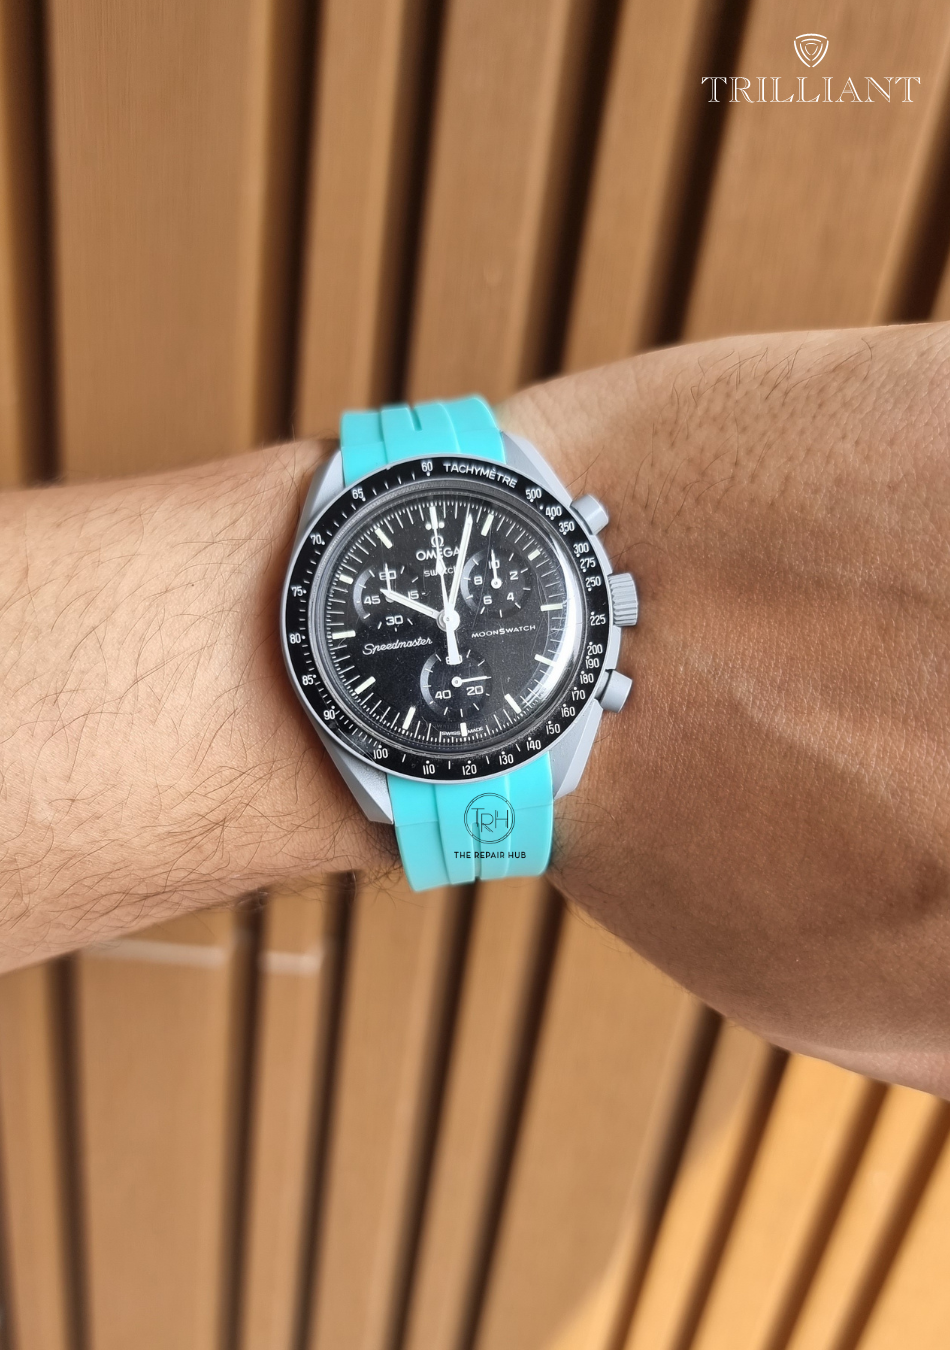 Men's Watches BENAYR Casual Chronograph Analog Quartz Waterproof Sports Watches  Rubber Strap Business Wrist Watches for Men, GoldBlue, Chronograph,Quartz  Movement : Amazon.in: Fashion